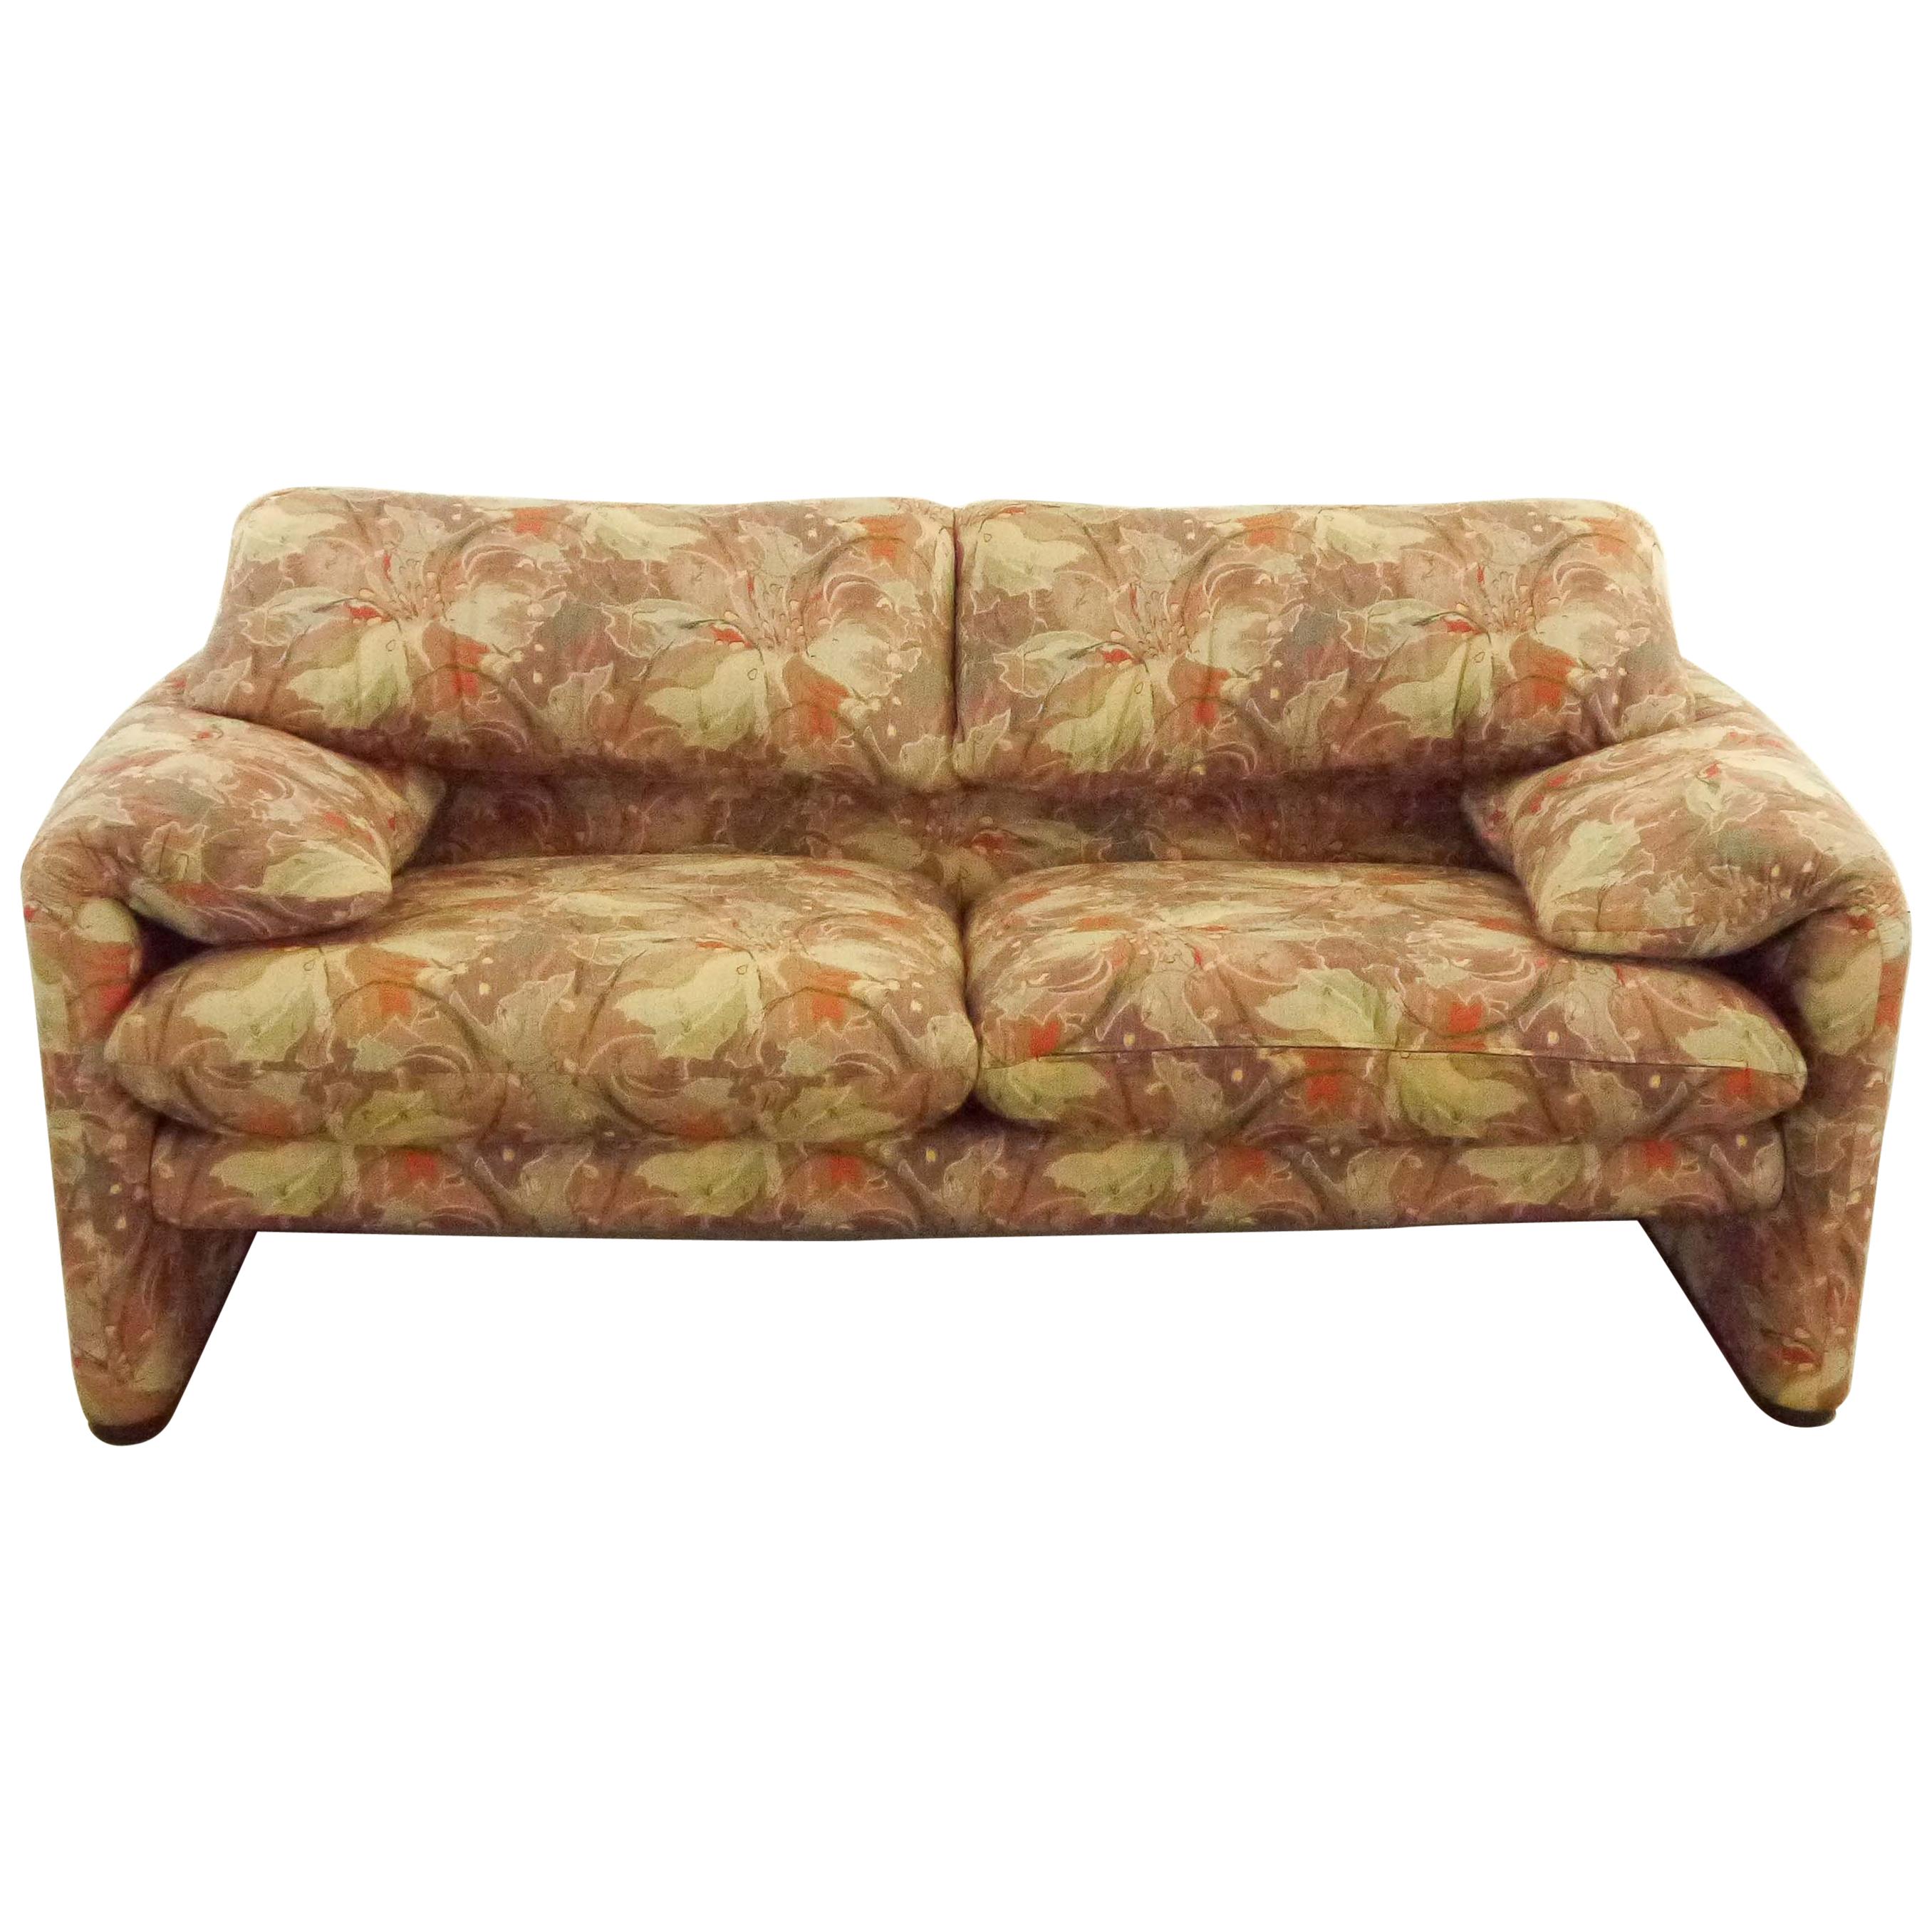 Cassina Maralunga 2-Seat Sofa by Vico Magistretti in Flowered Fabric